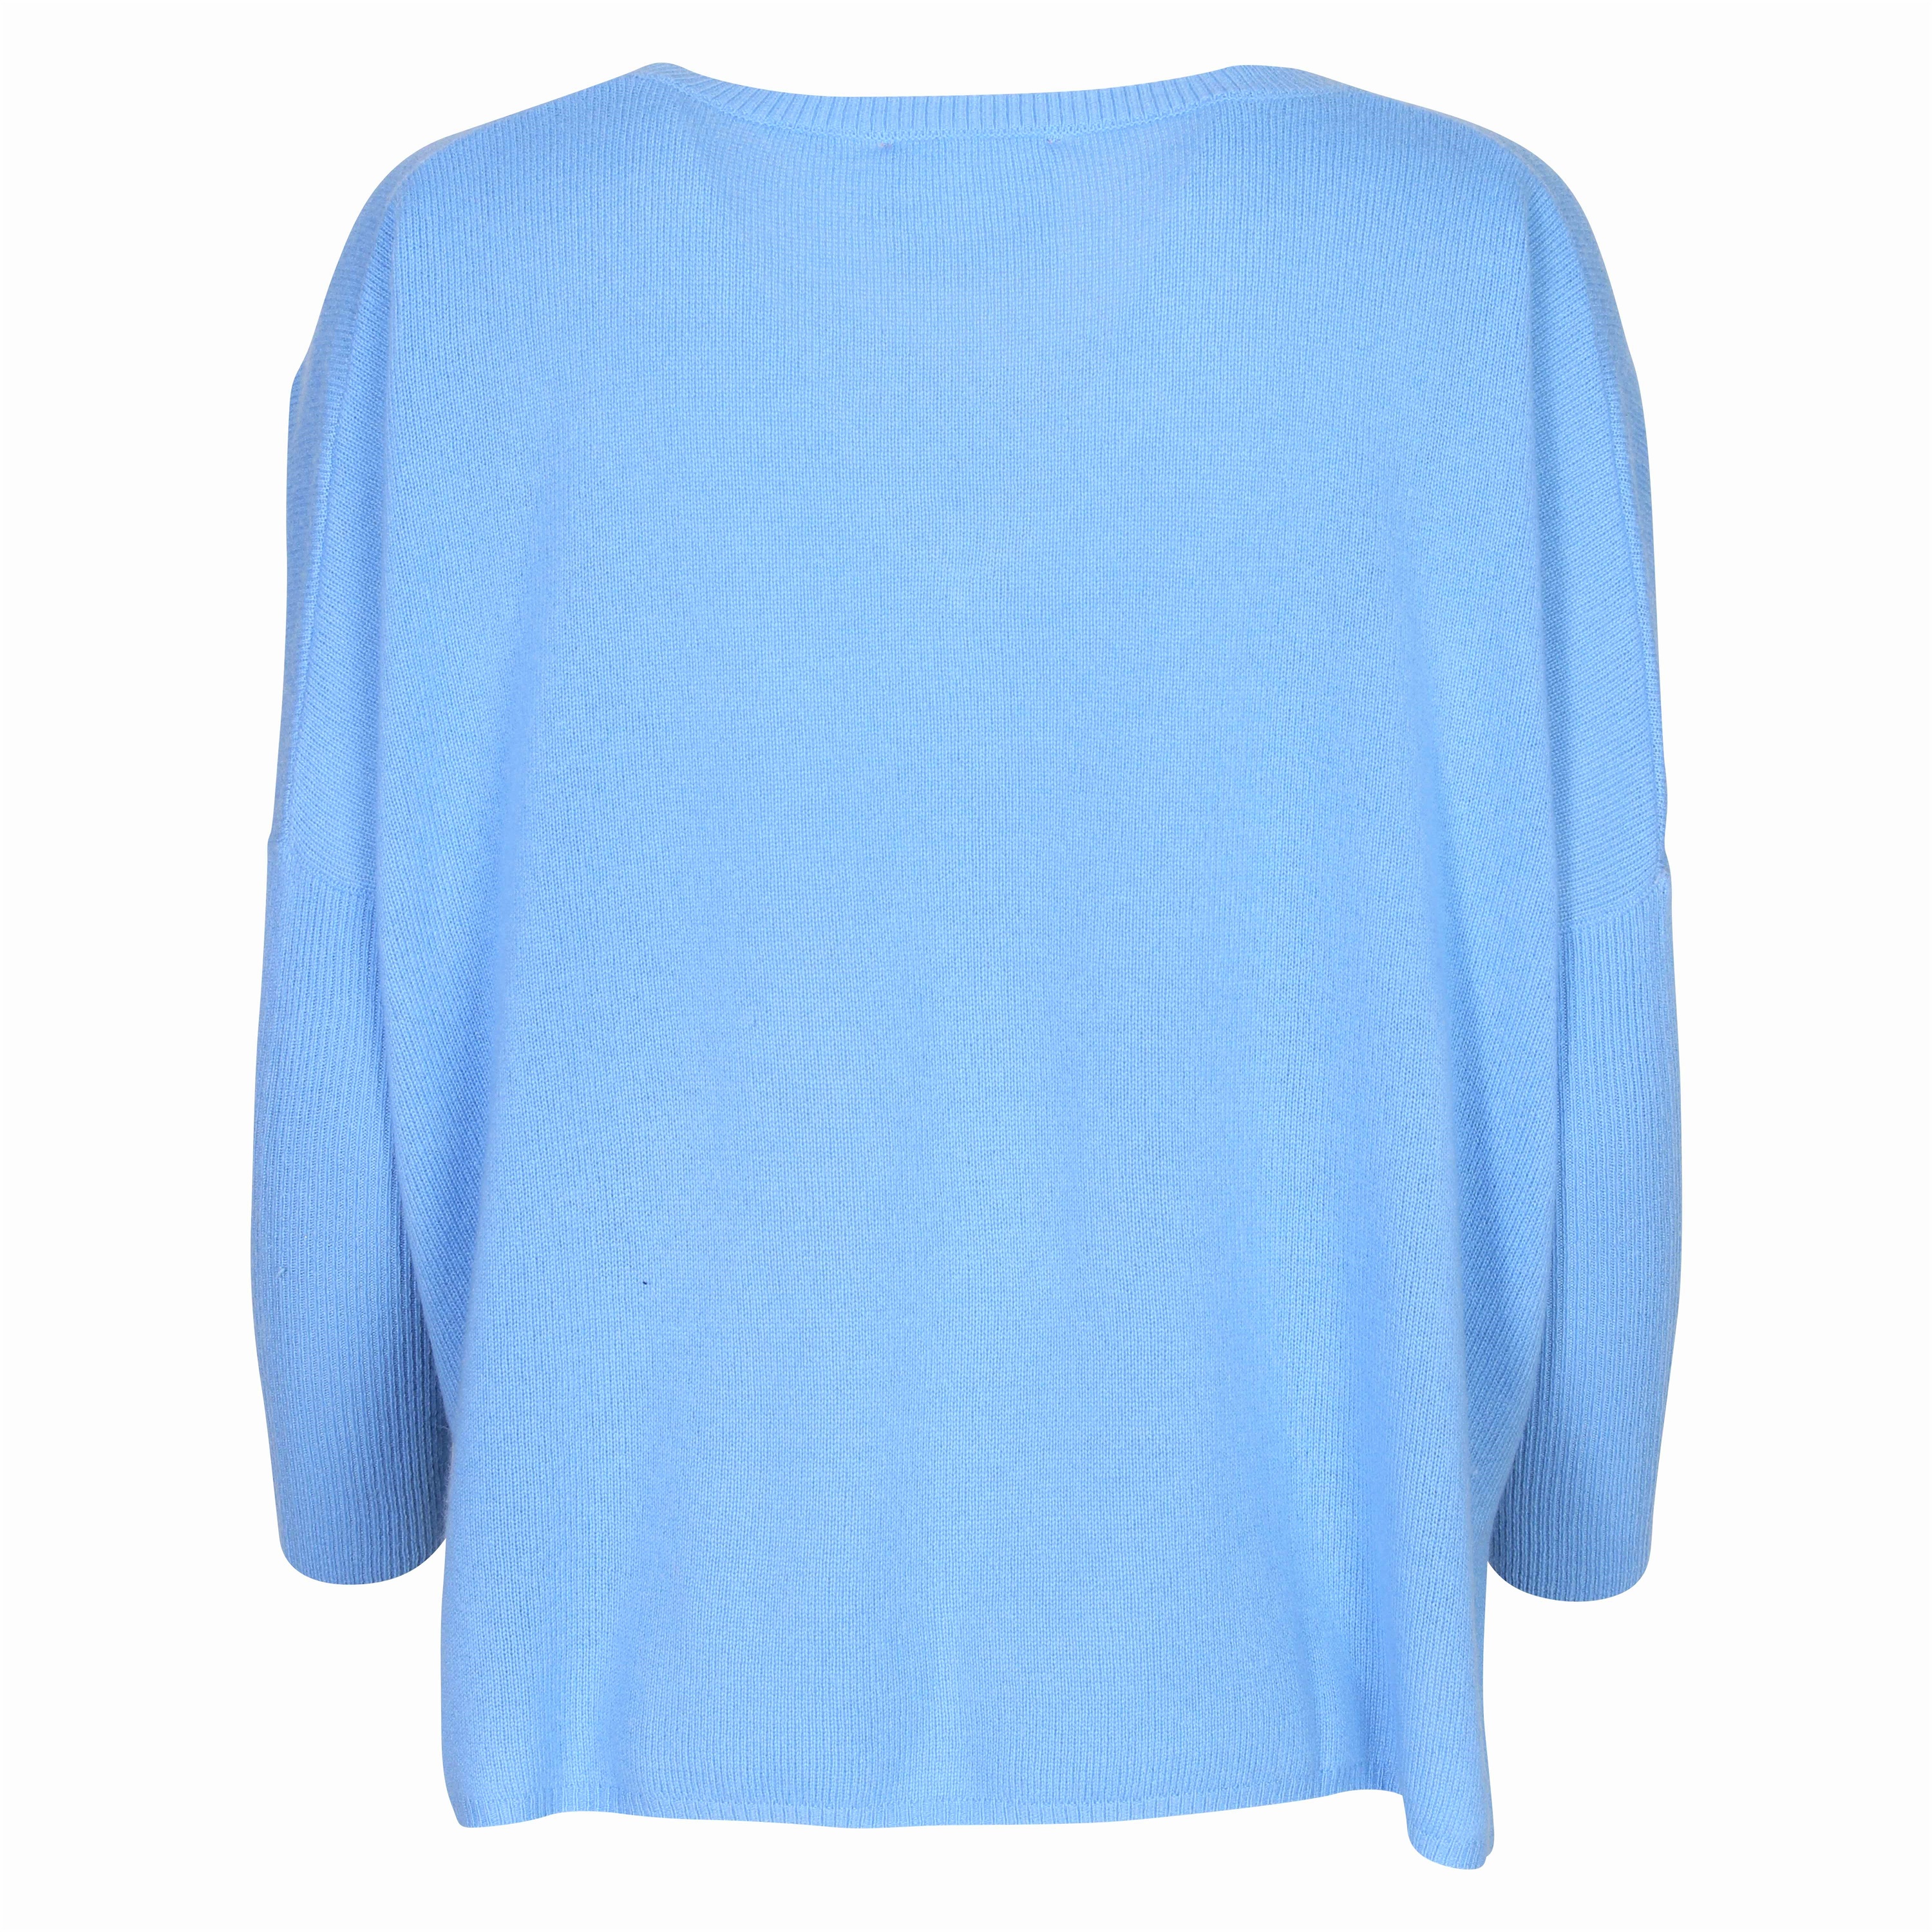 Absolut Cashmere Poncho Sweater in Azur Blue L